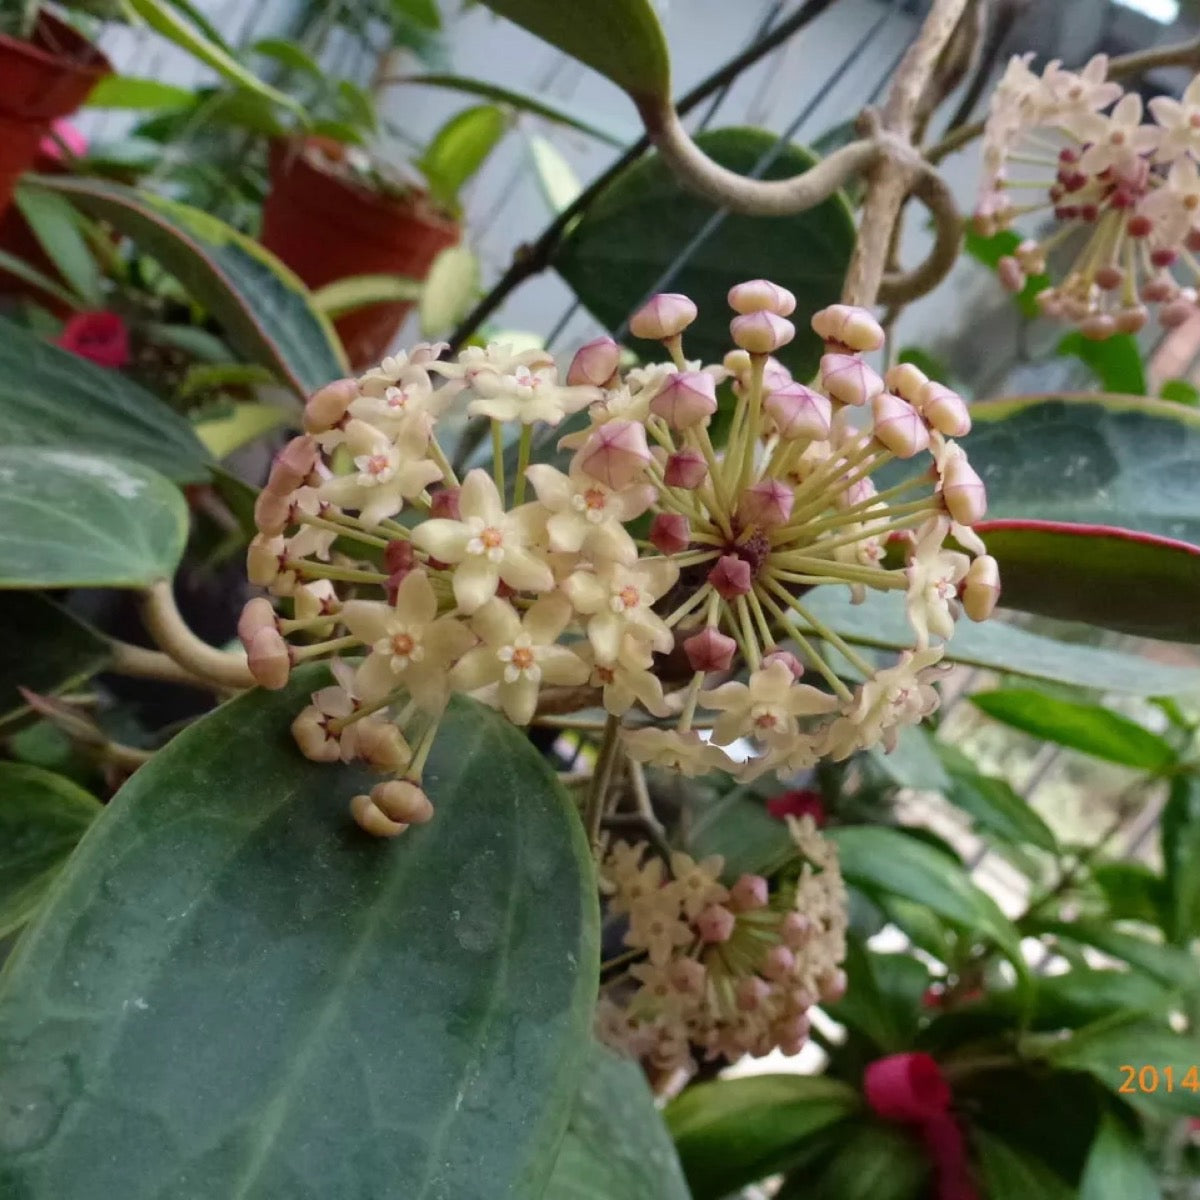 花邊大葉球蘭 Hoya macrophylla variegated